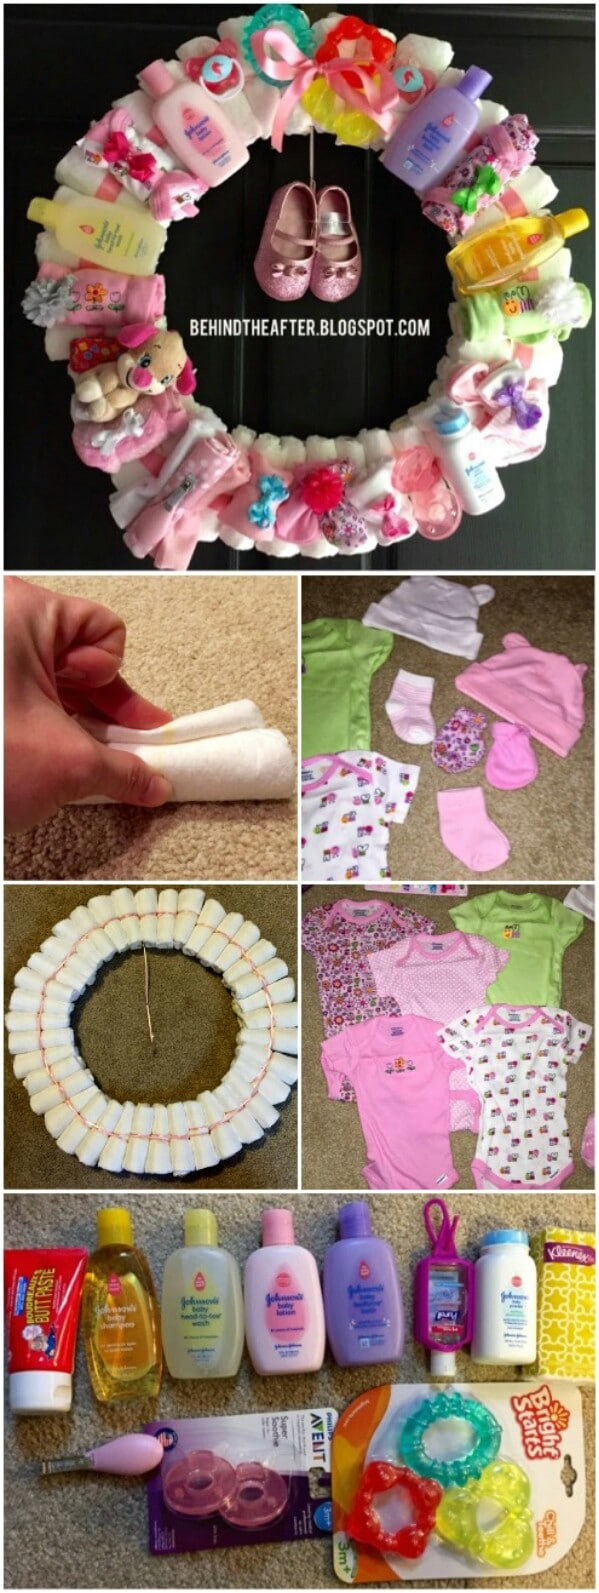 Diy Baby Shower Gift Ideas
 25 Enchantingly Adorable Baby Shower Gift Ideas That Will